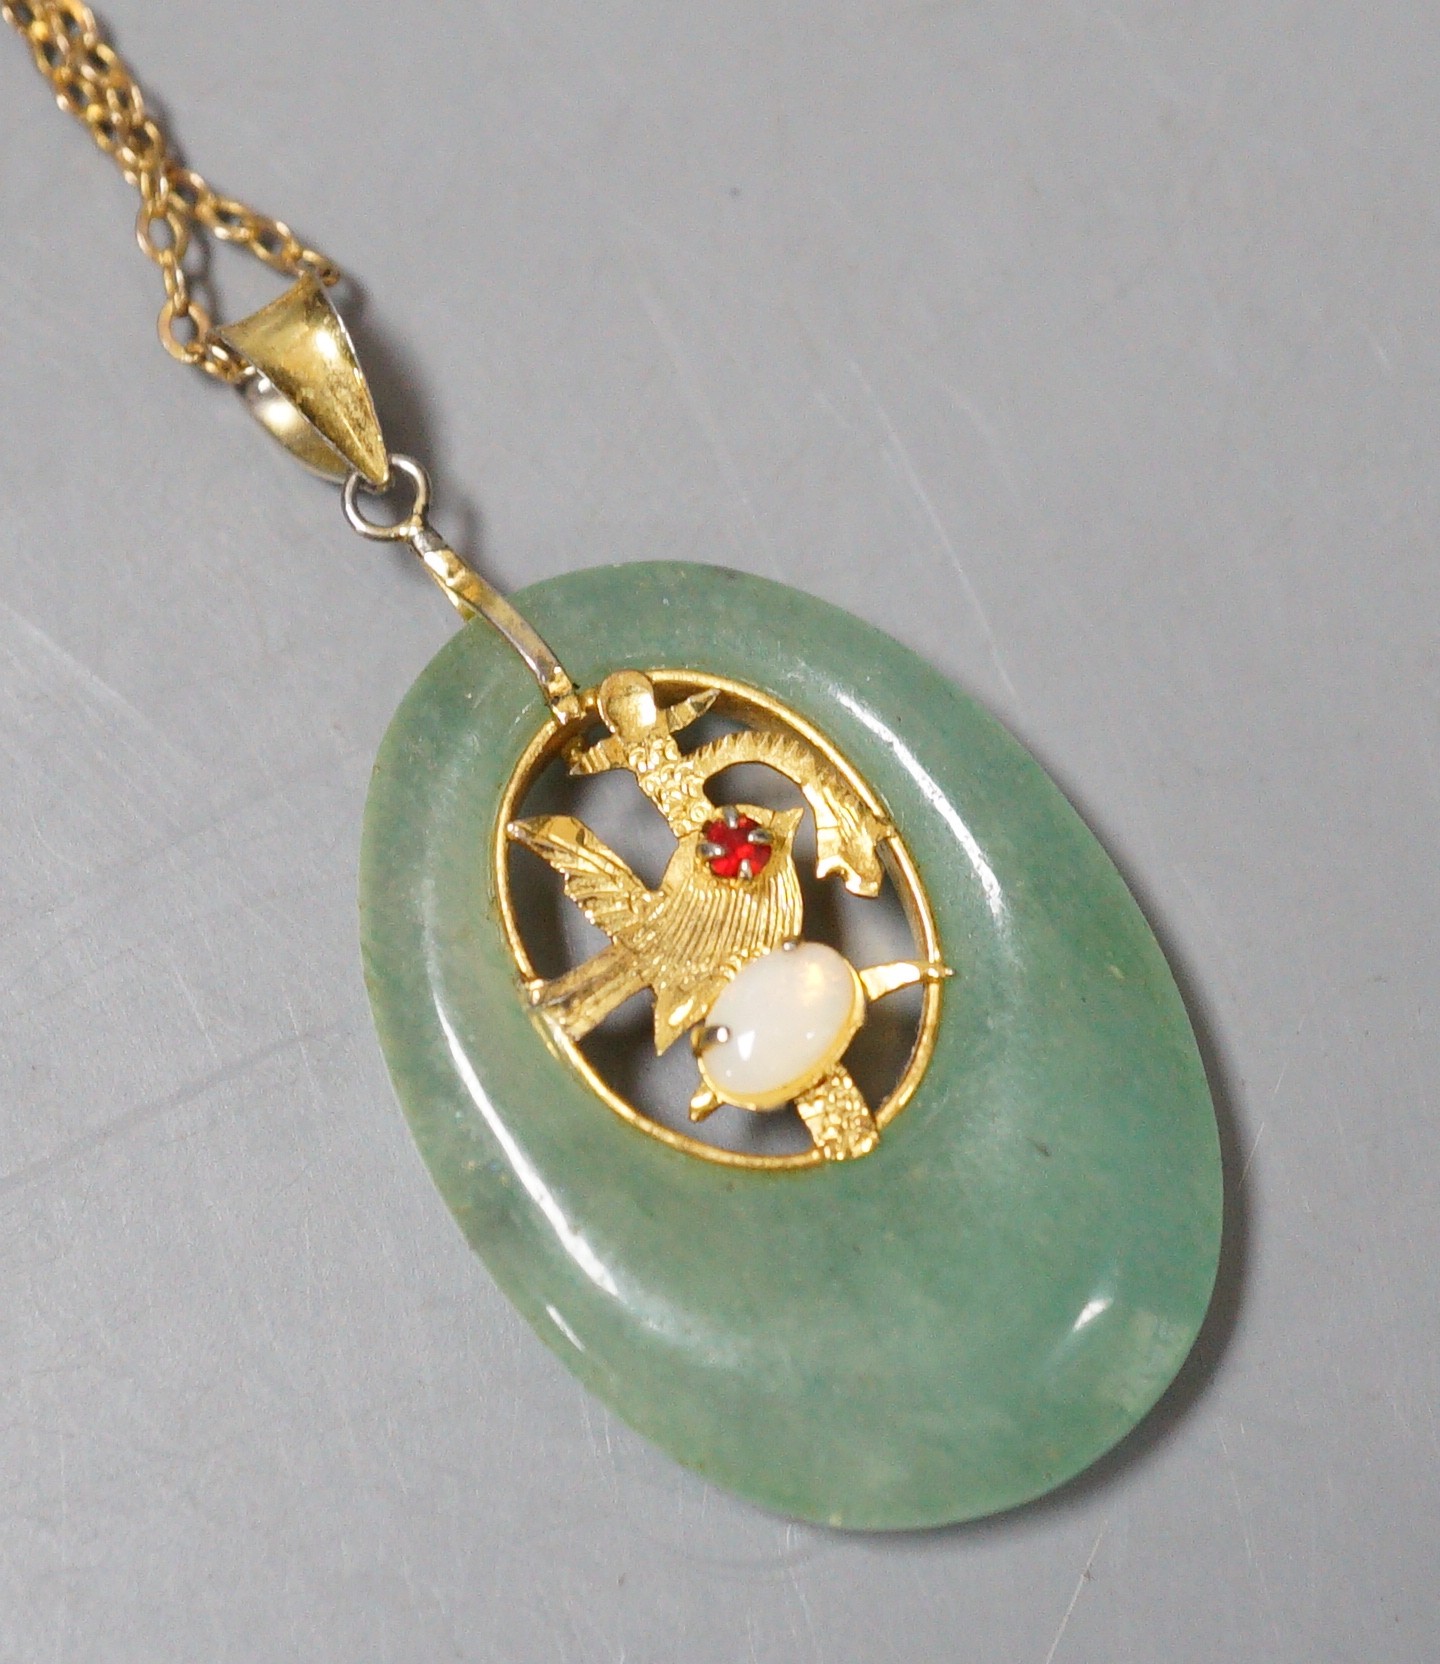 A gilt metal and gem set mounted oval adventurine quartz? pendant, 36mm, on a 9ct chain, 46cm, gross weight 9.4 grams.